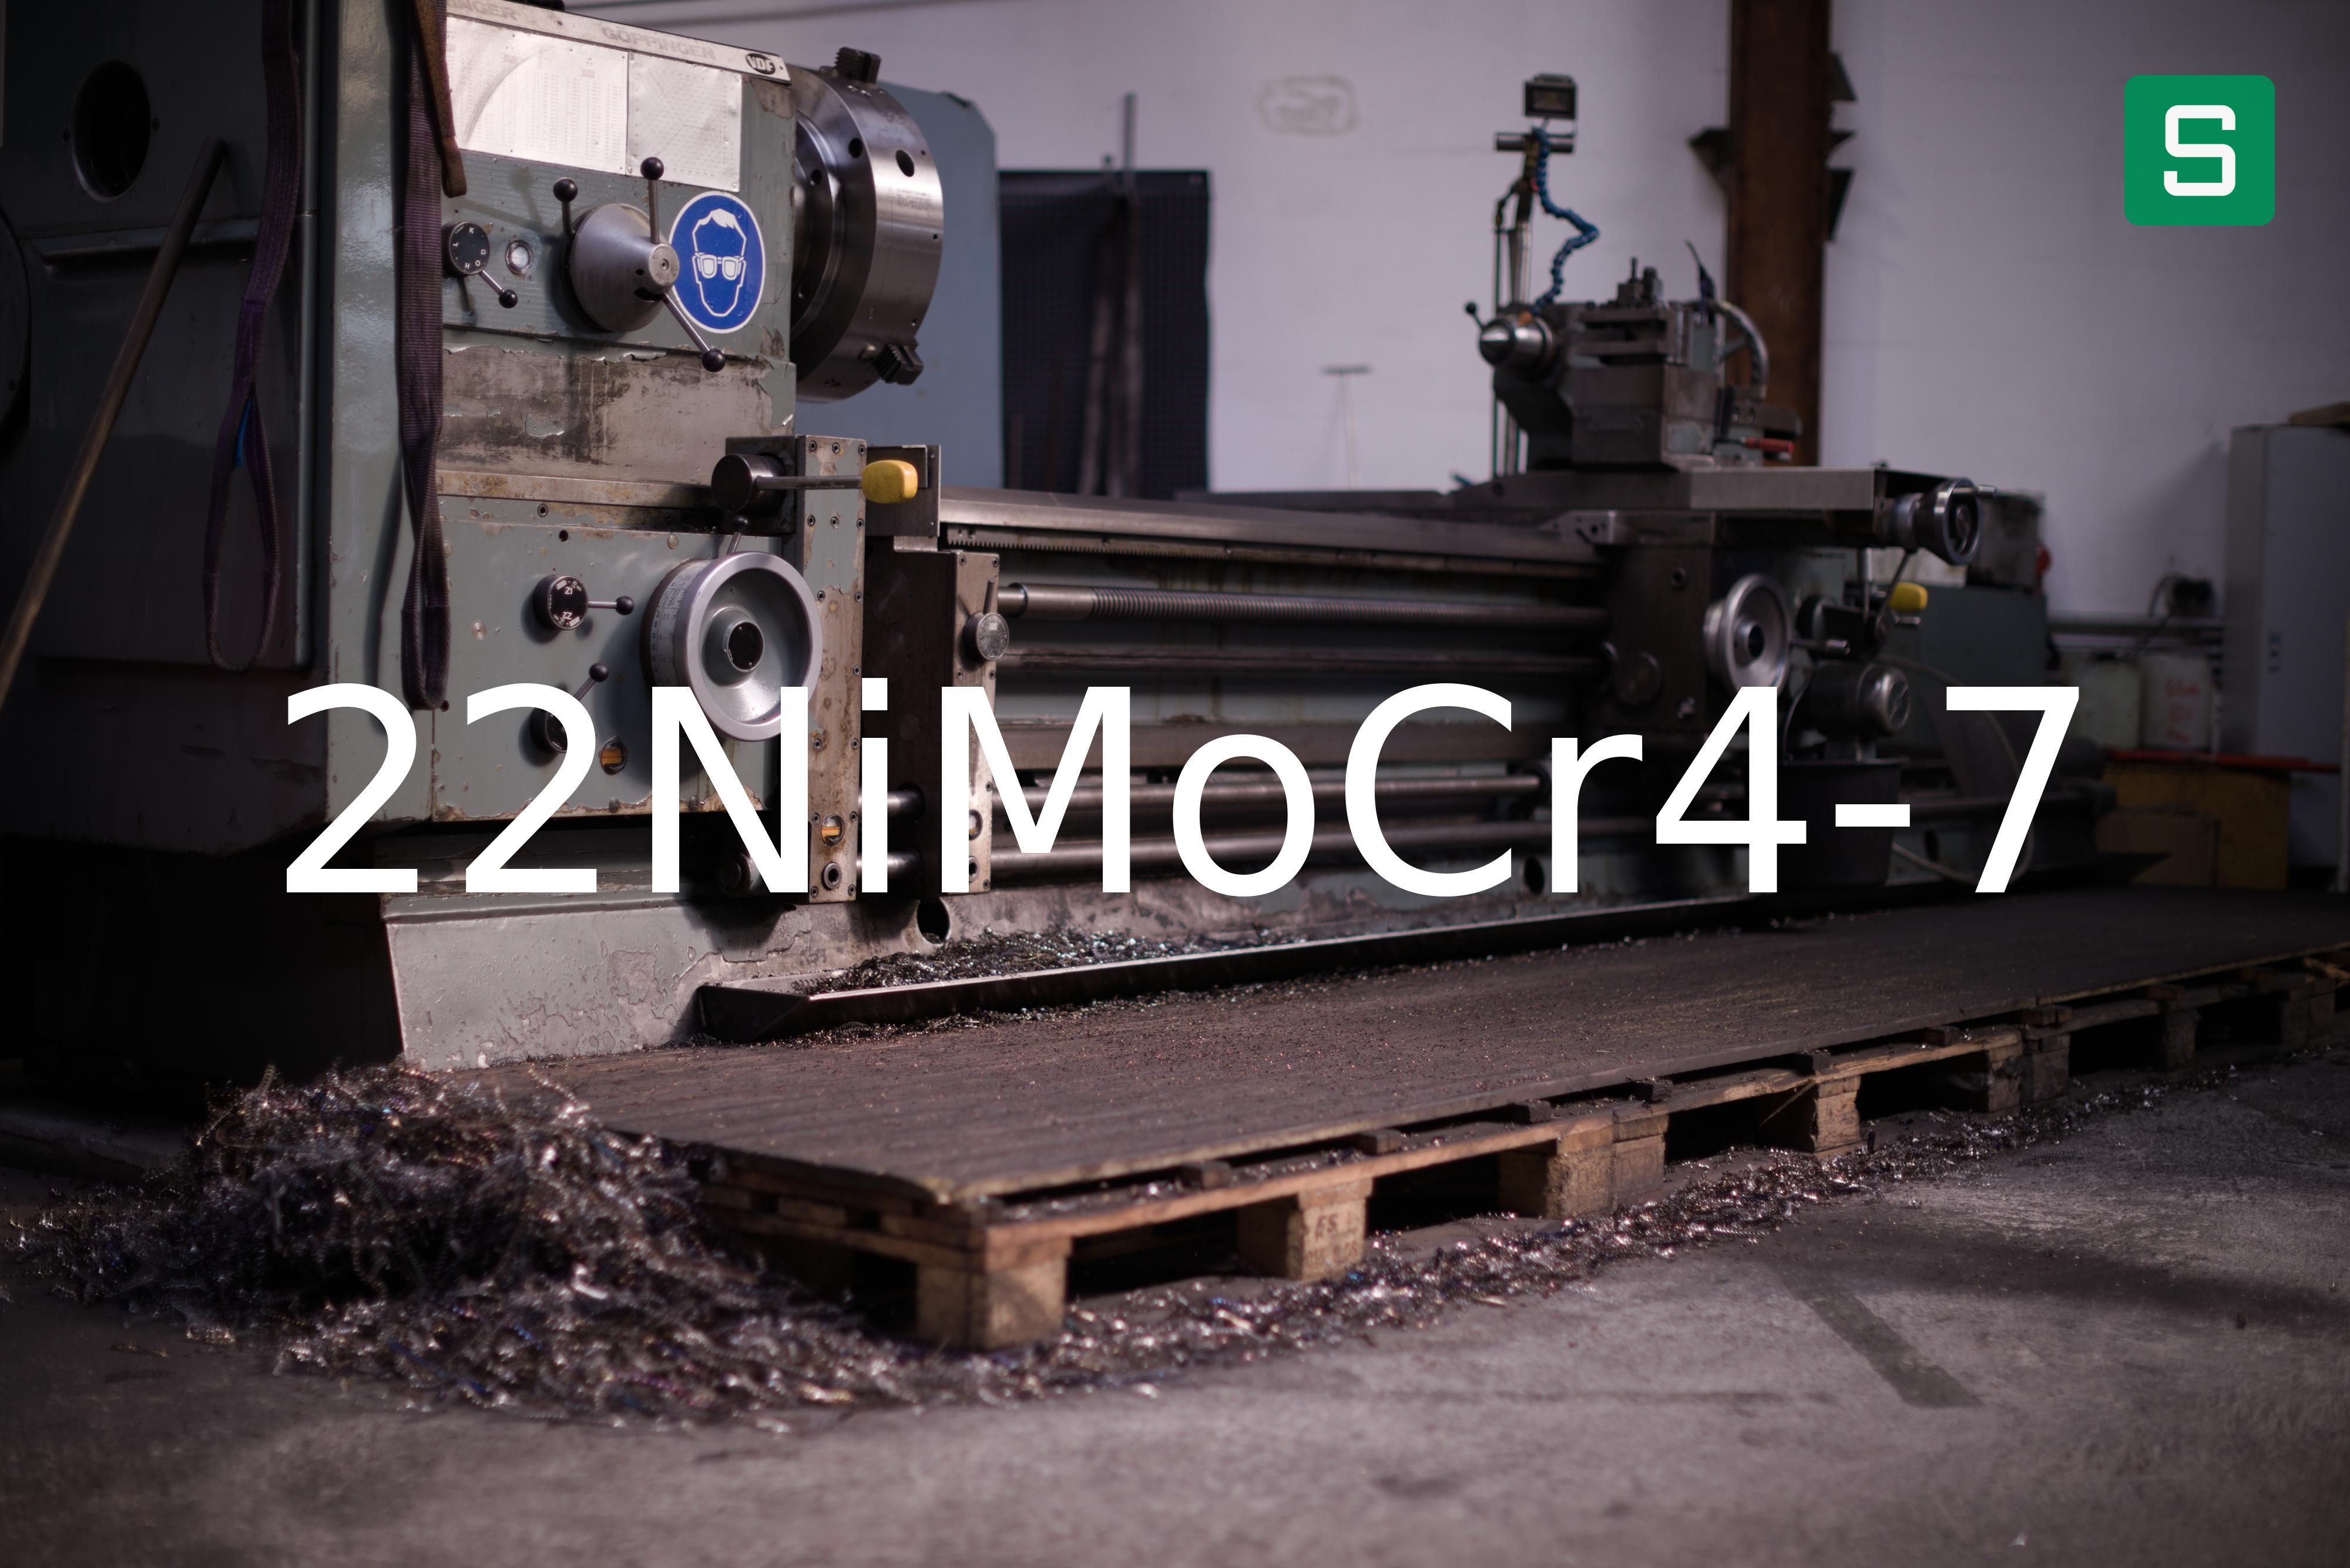 Steel Material: 22NiMoCr4-7